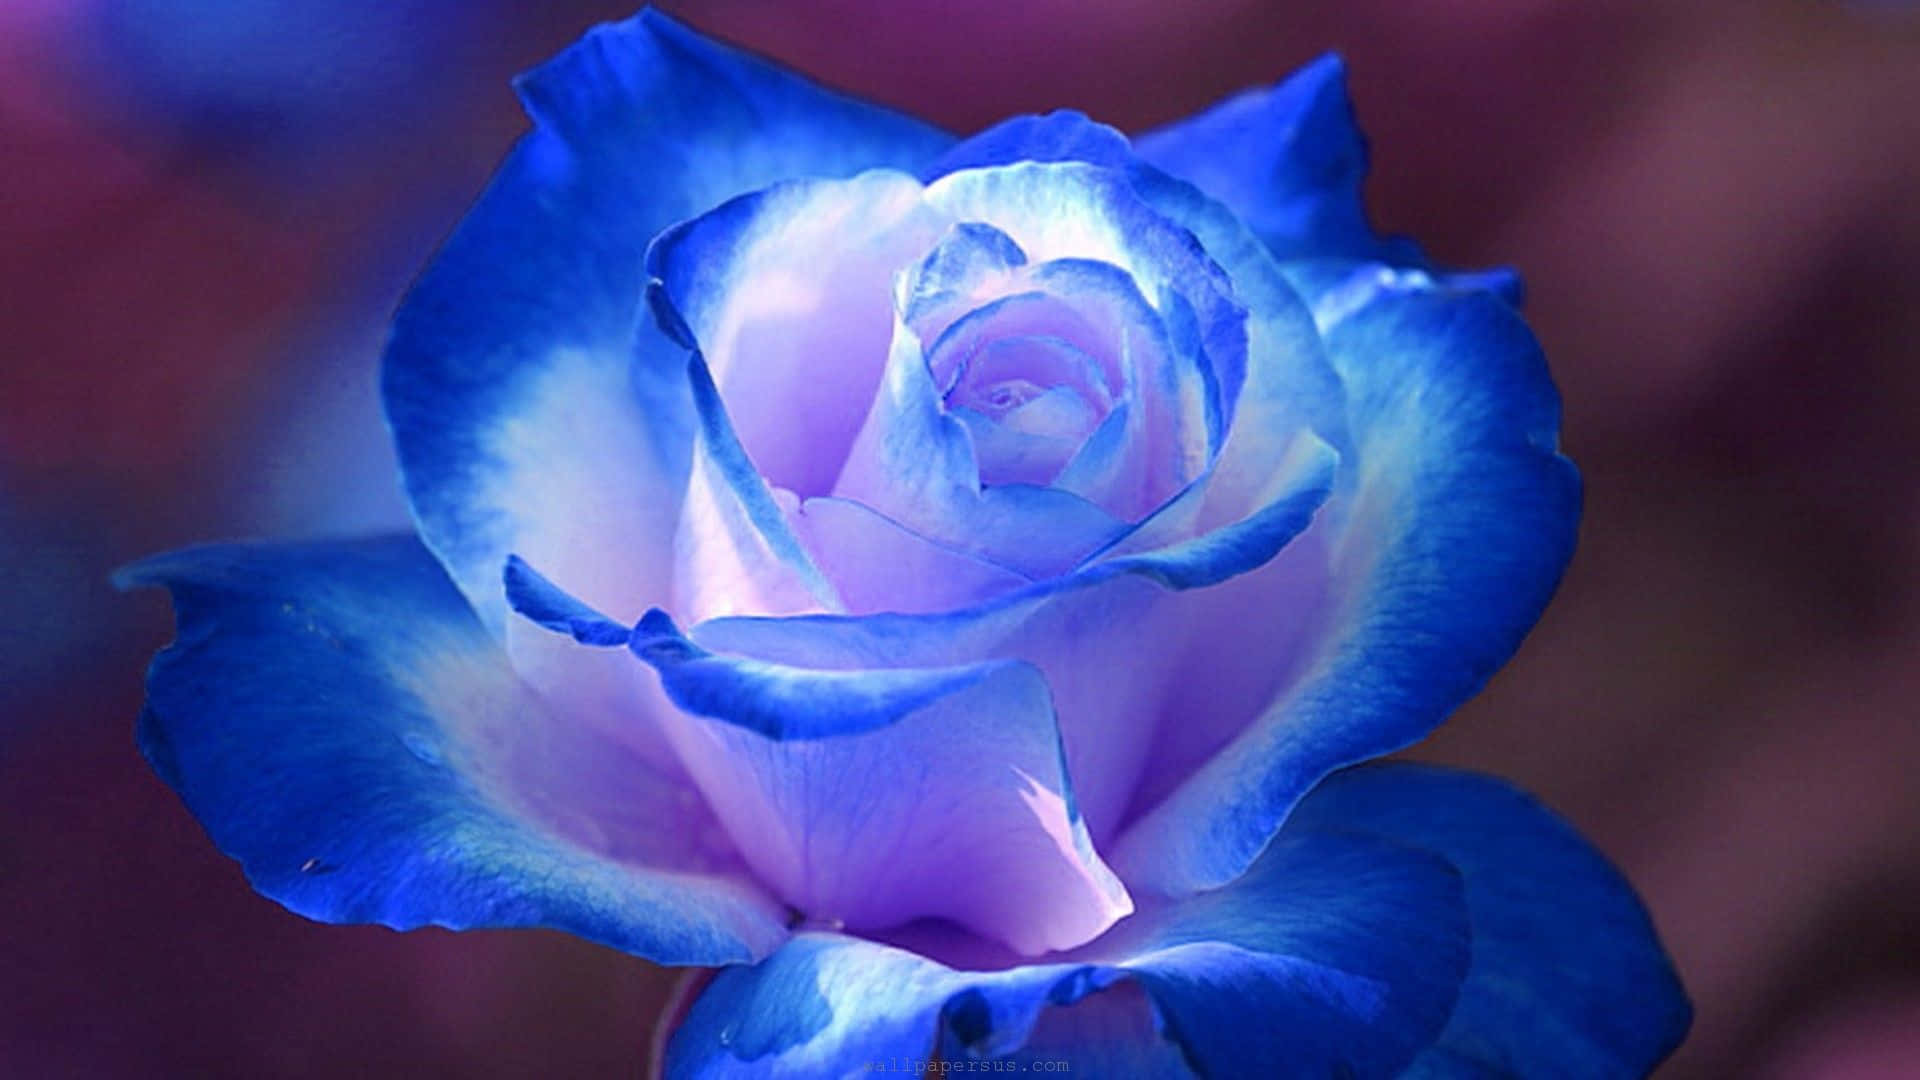 Caption: Mystical Blue Rose